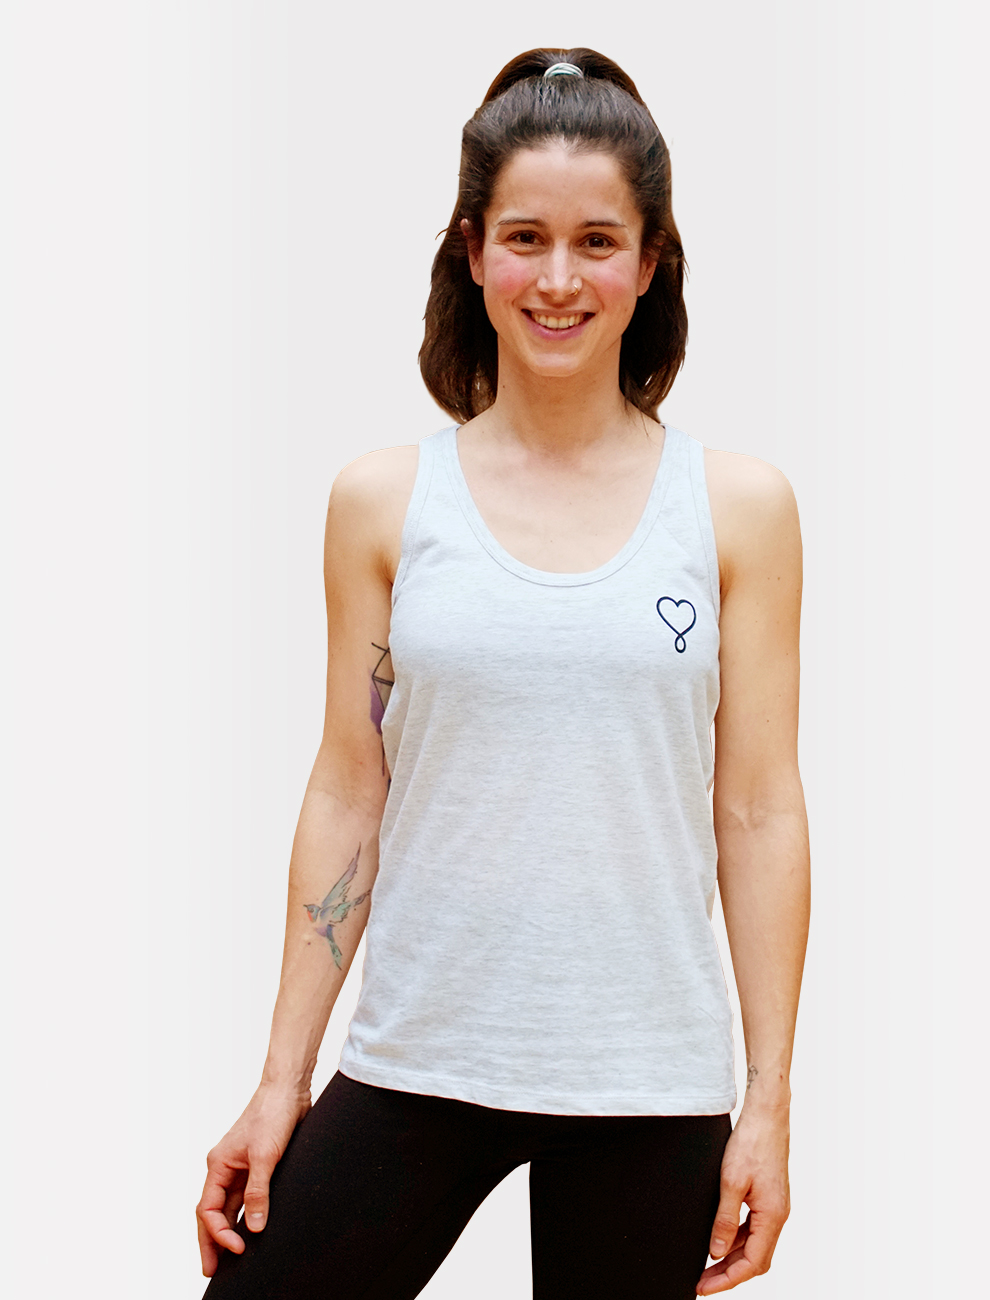 SHIVA LOVES YOU TANK - Erdenkind -Yoga Top aus 100% Biobaumwolle